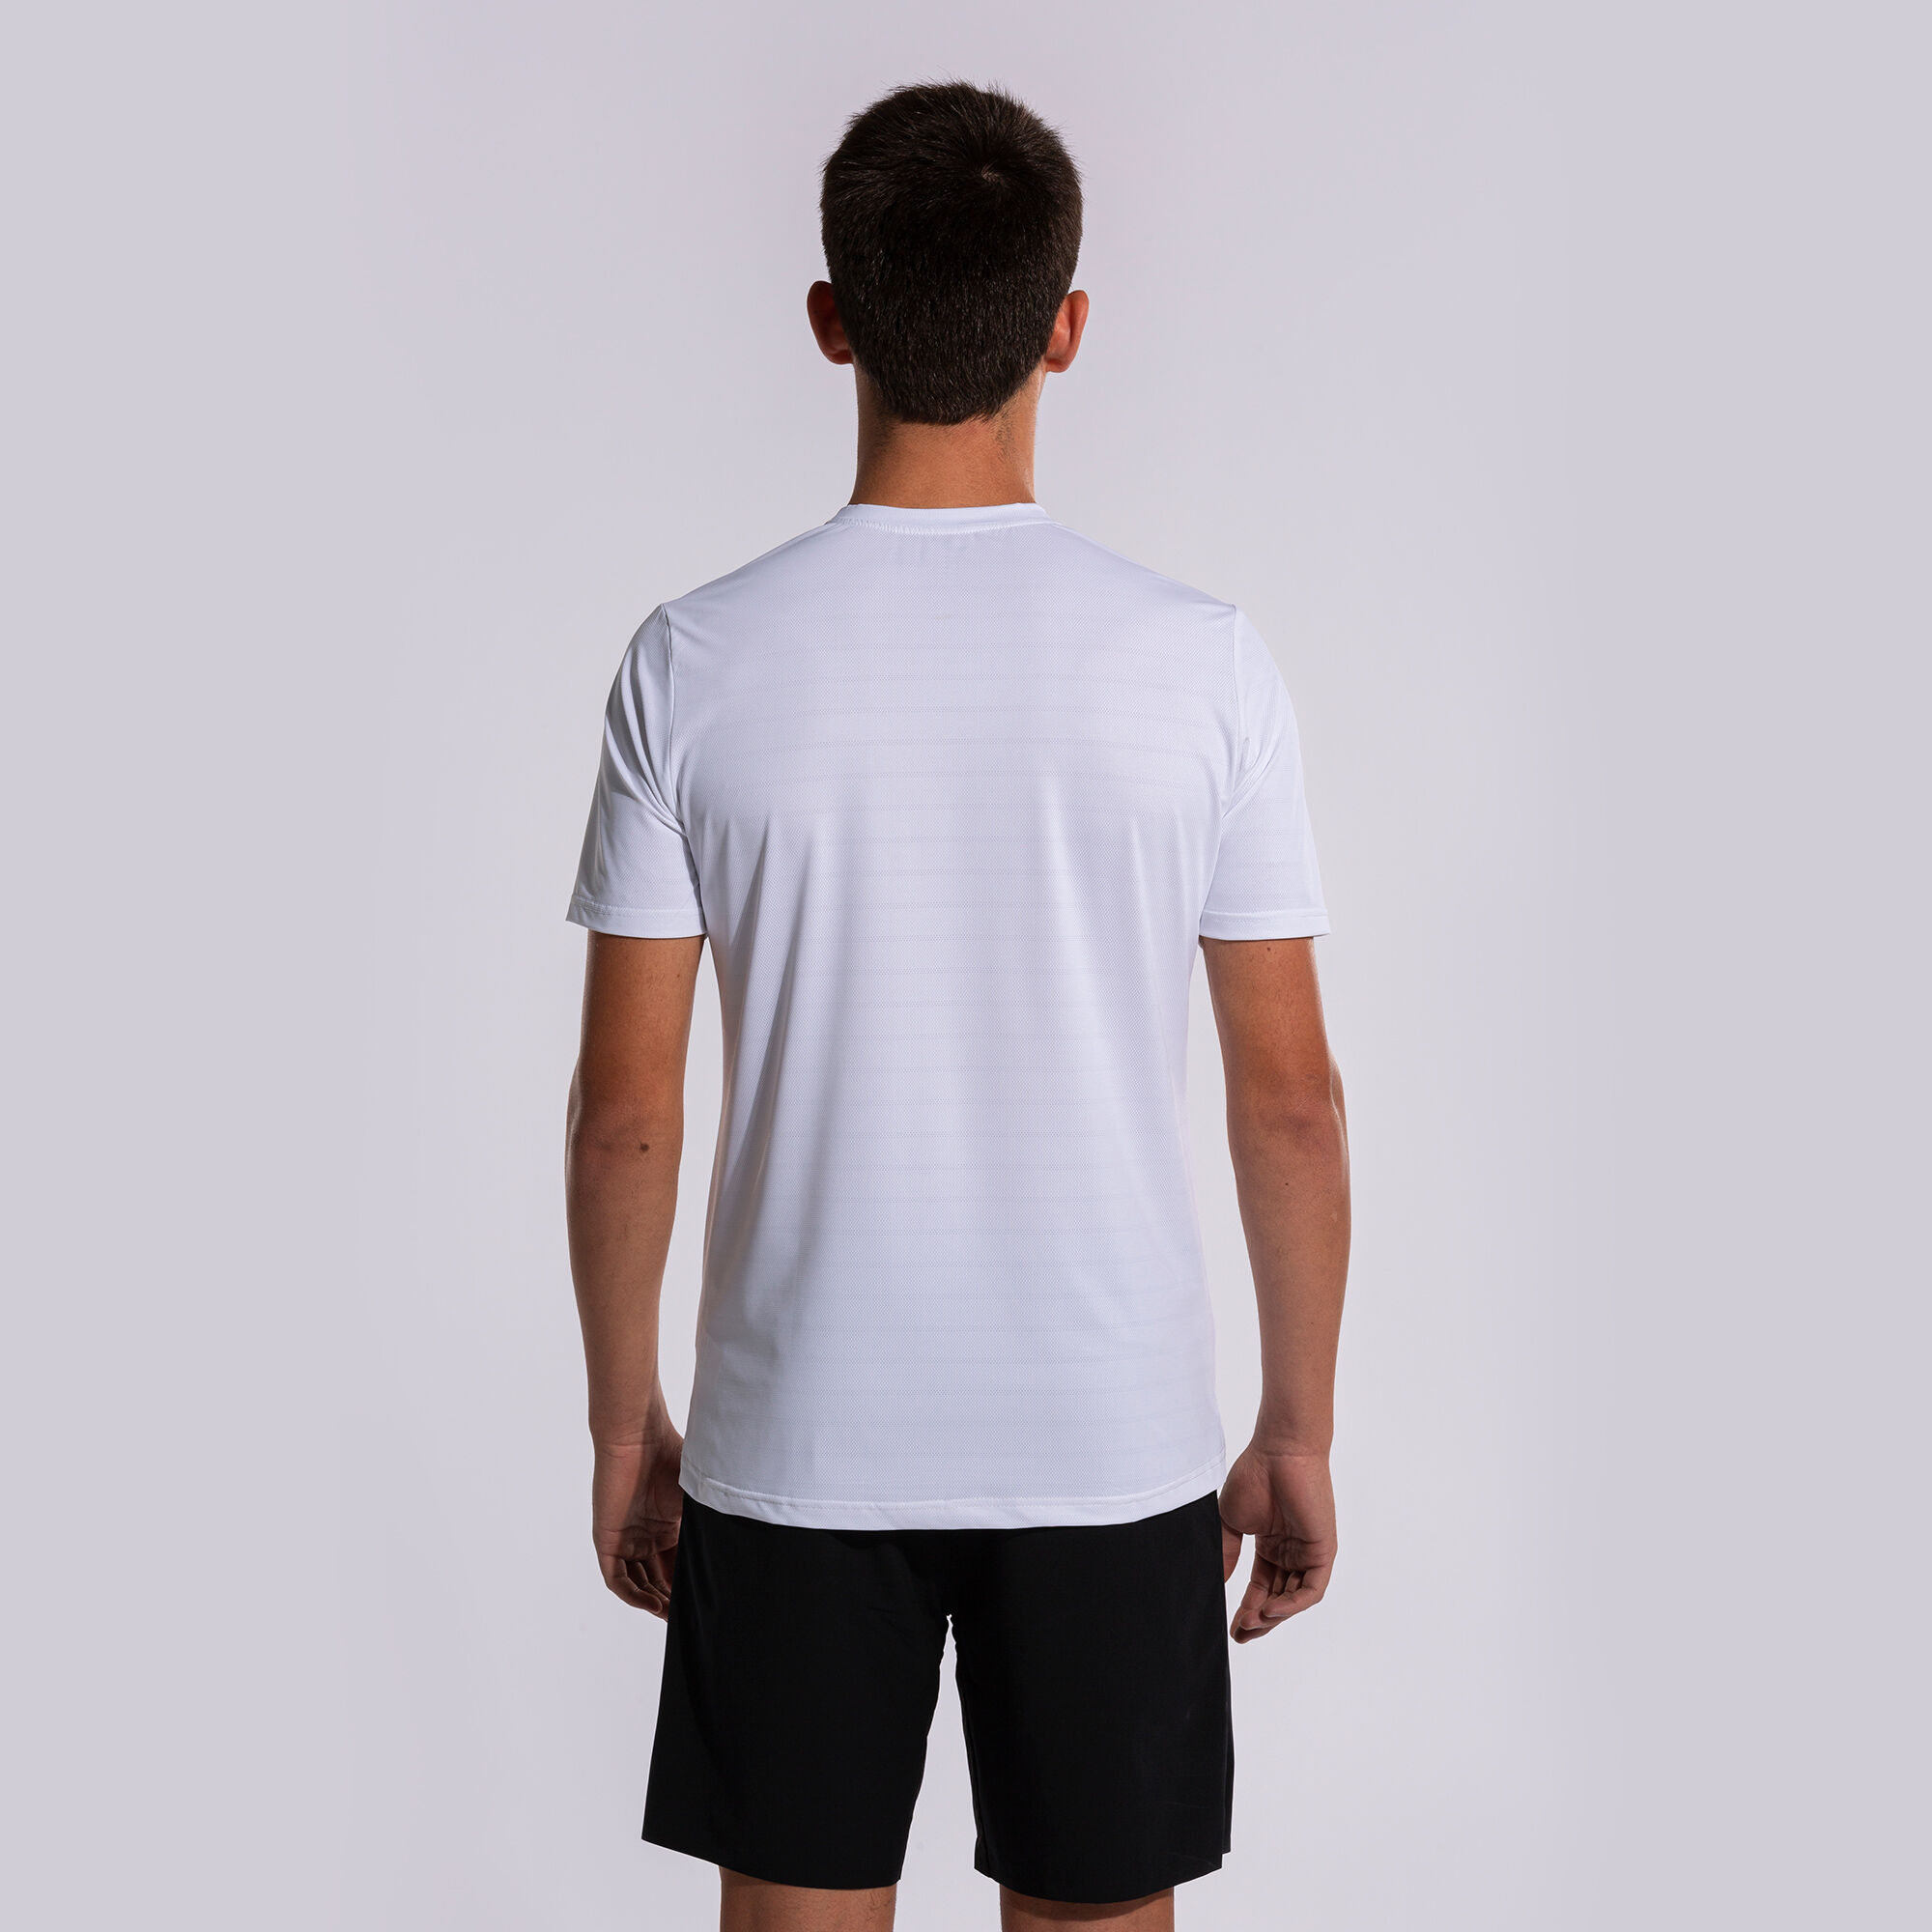 Camiseta manga corta hombre Marathon blanco